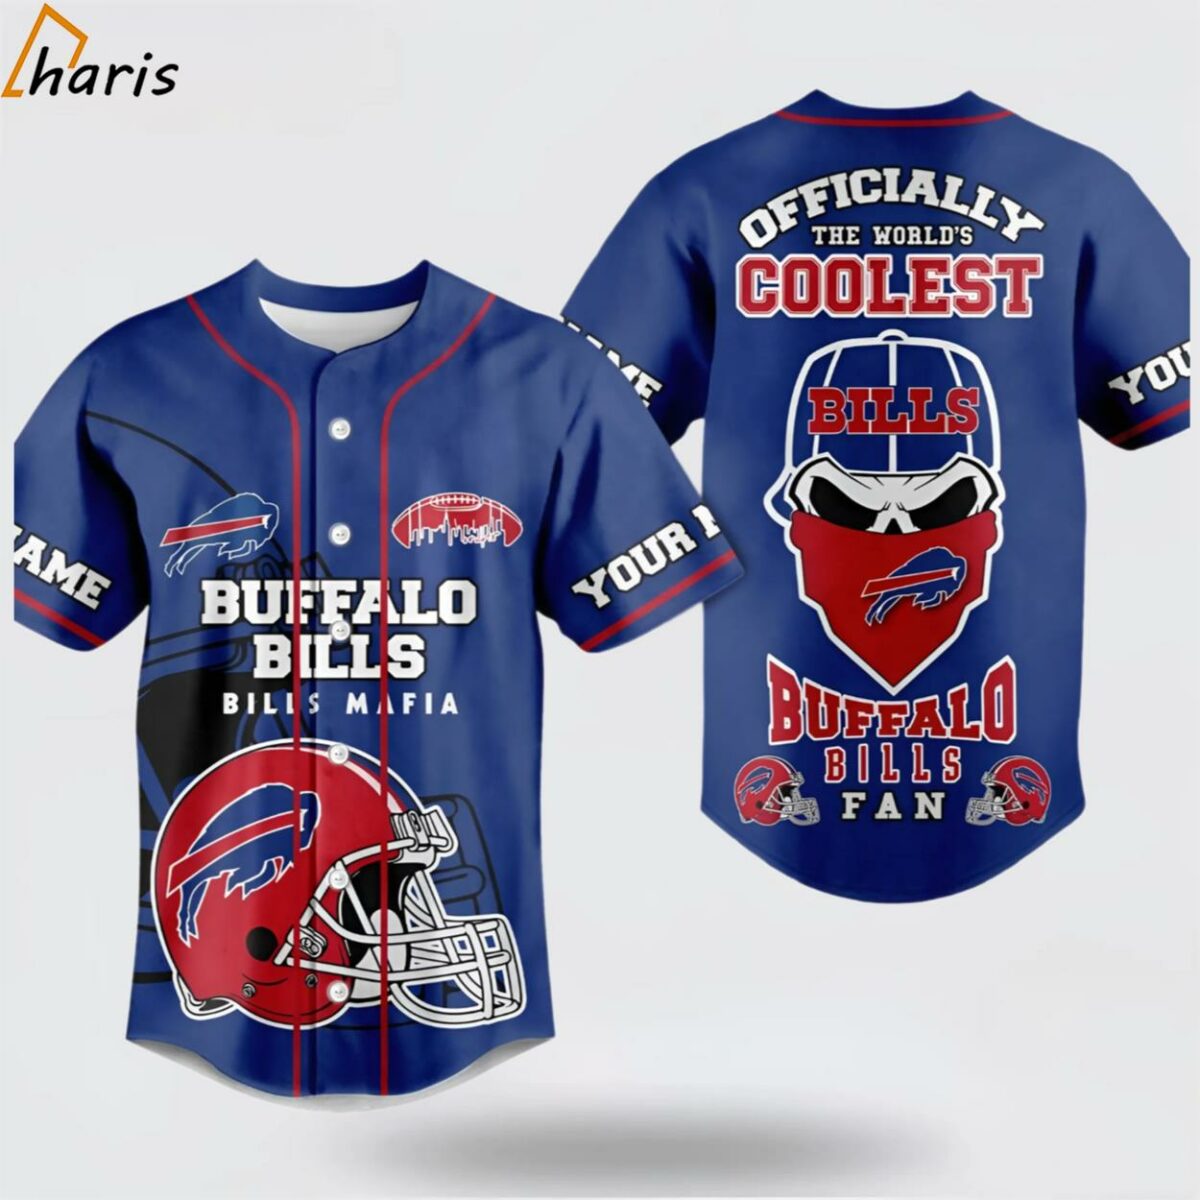 Buffalo Bills Mafia Officially The World's Coolest Custom Baseball Jersey 1 jersey